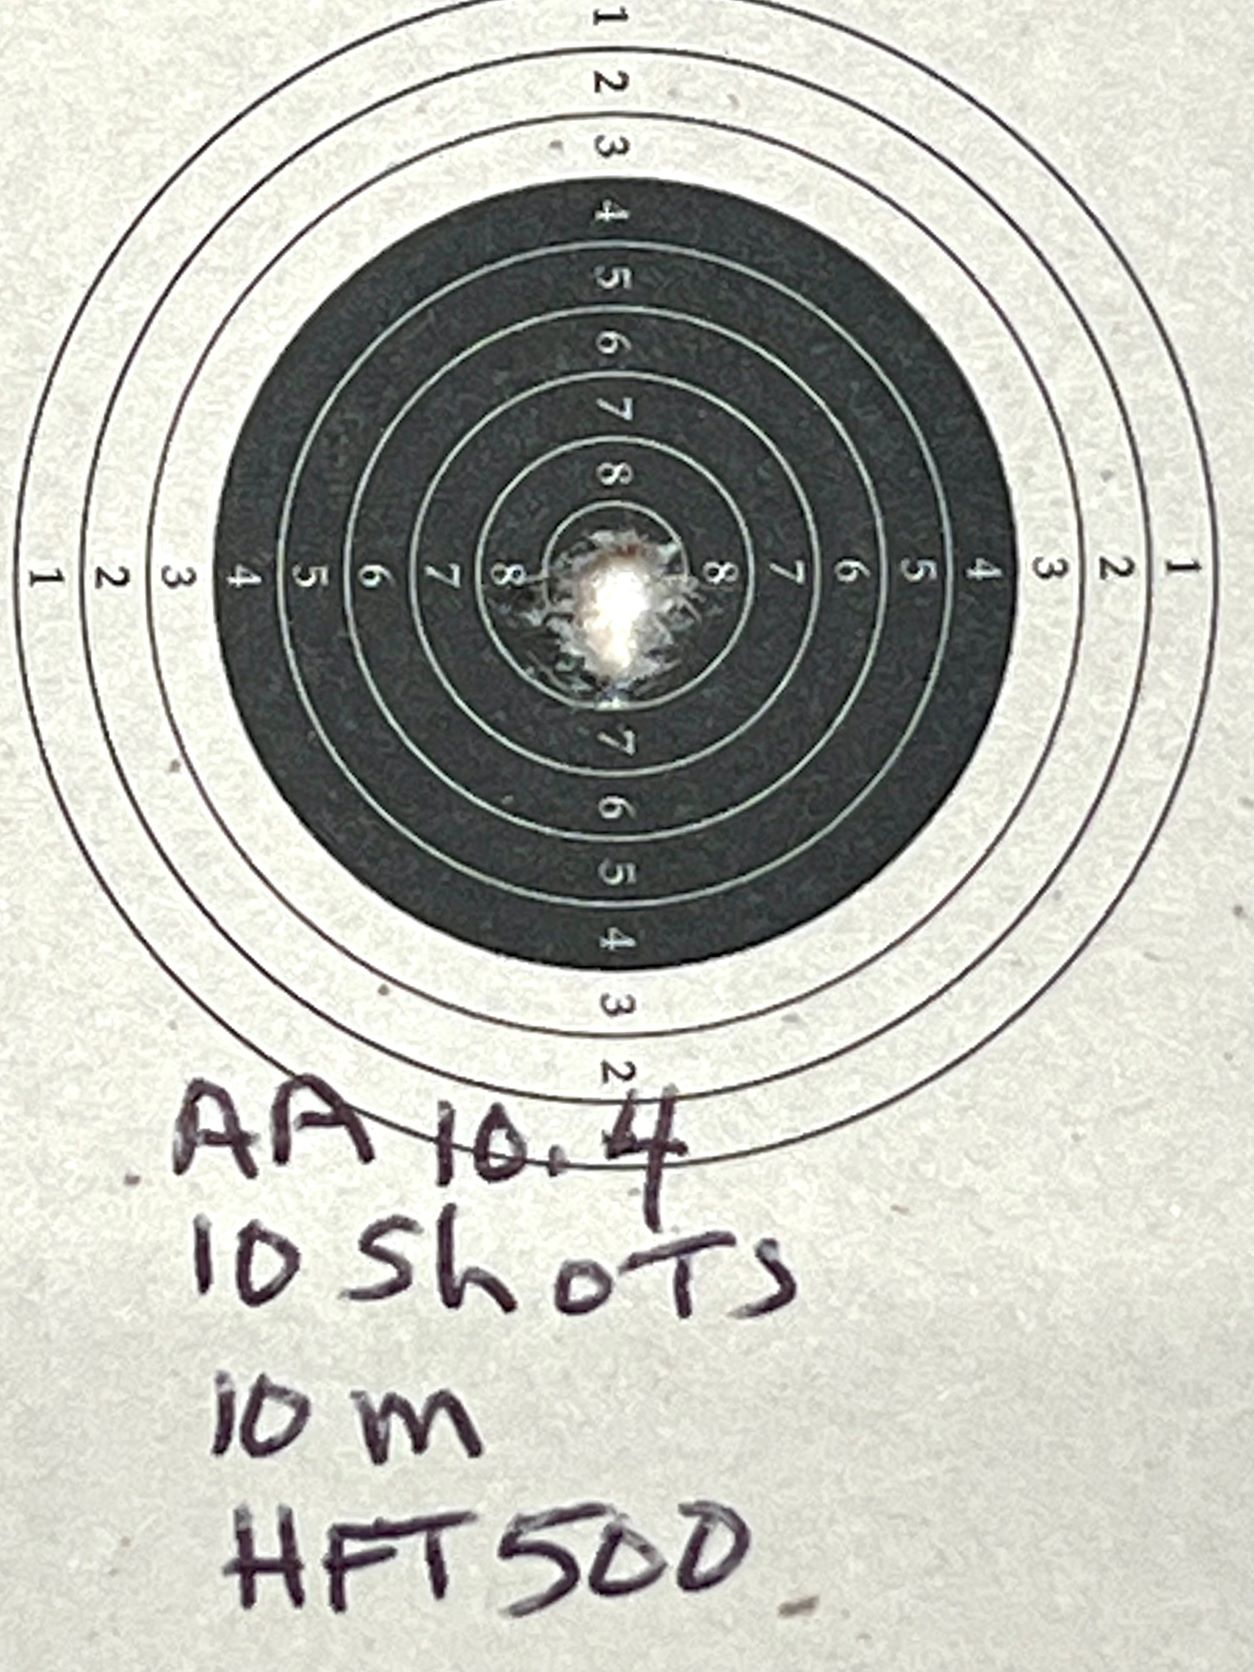 AA 10.4, 10 shots, 10M.jpg